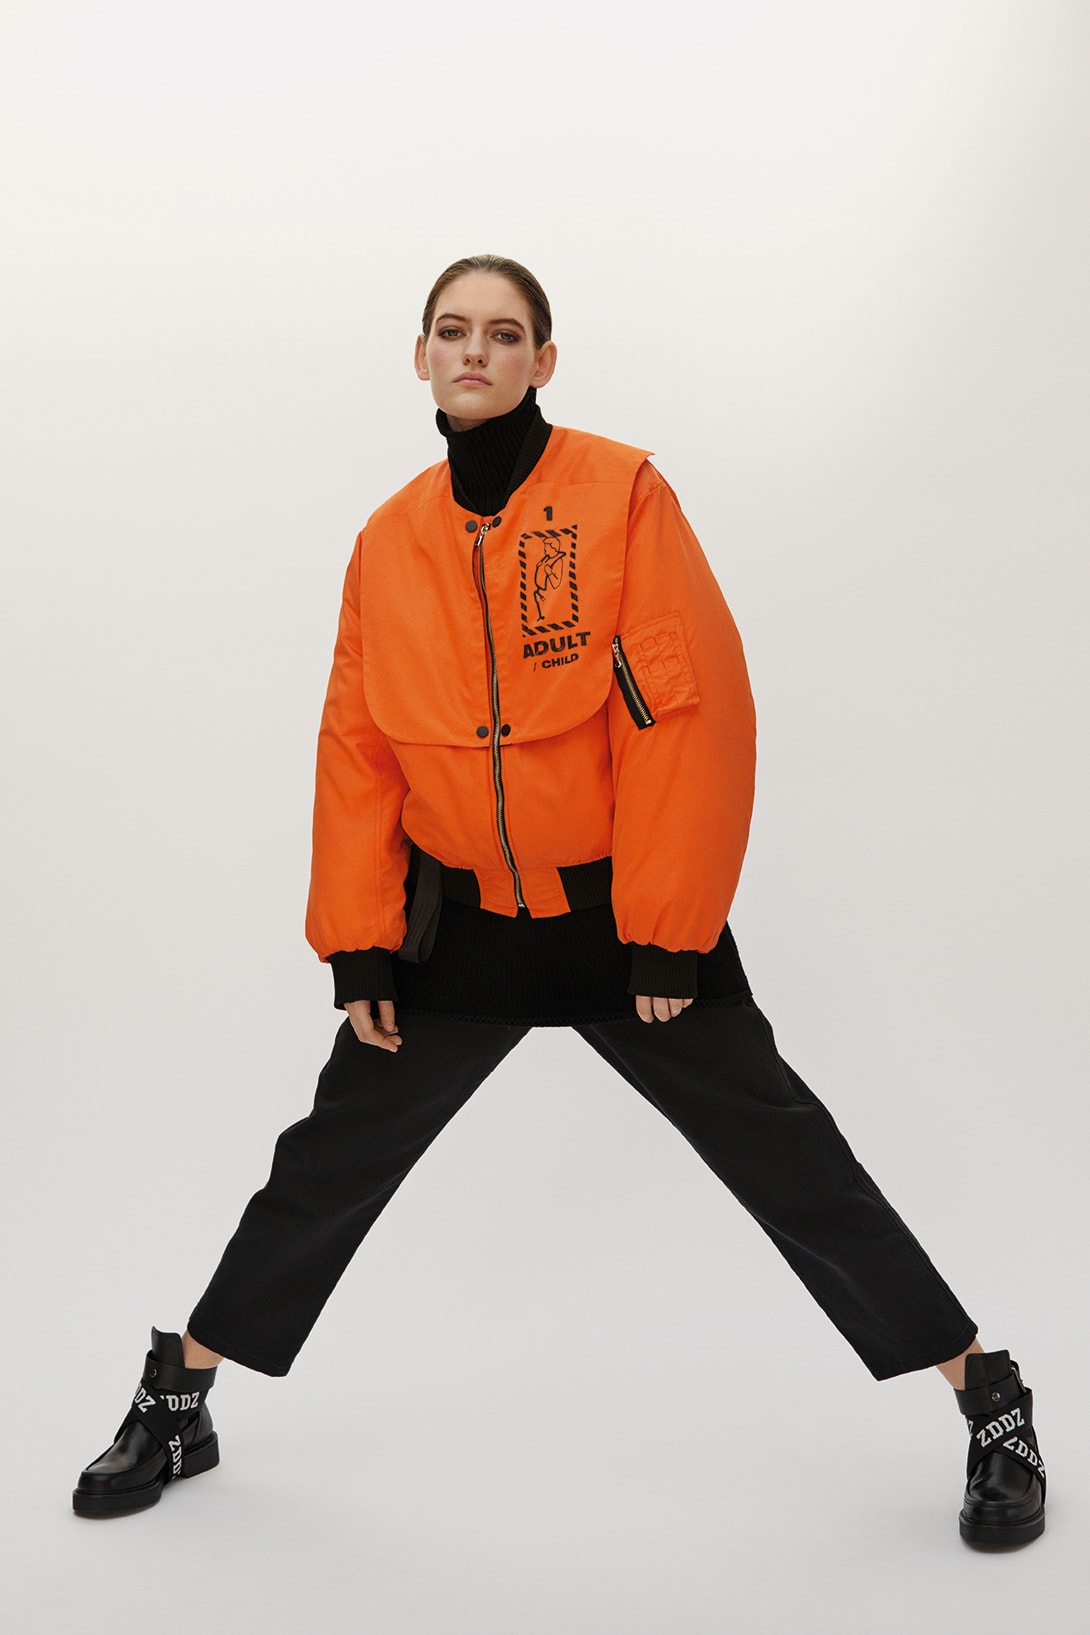 ZDDZ Fall/Winter 2018 Lookbook Collection life vests streetwear fashion